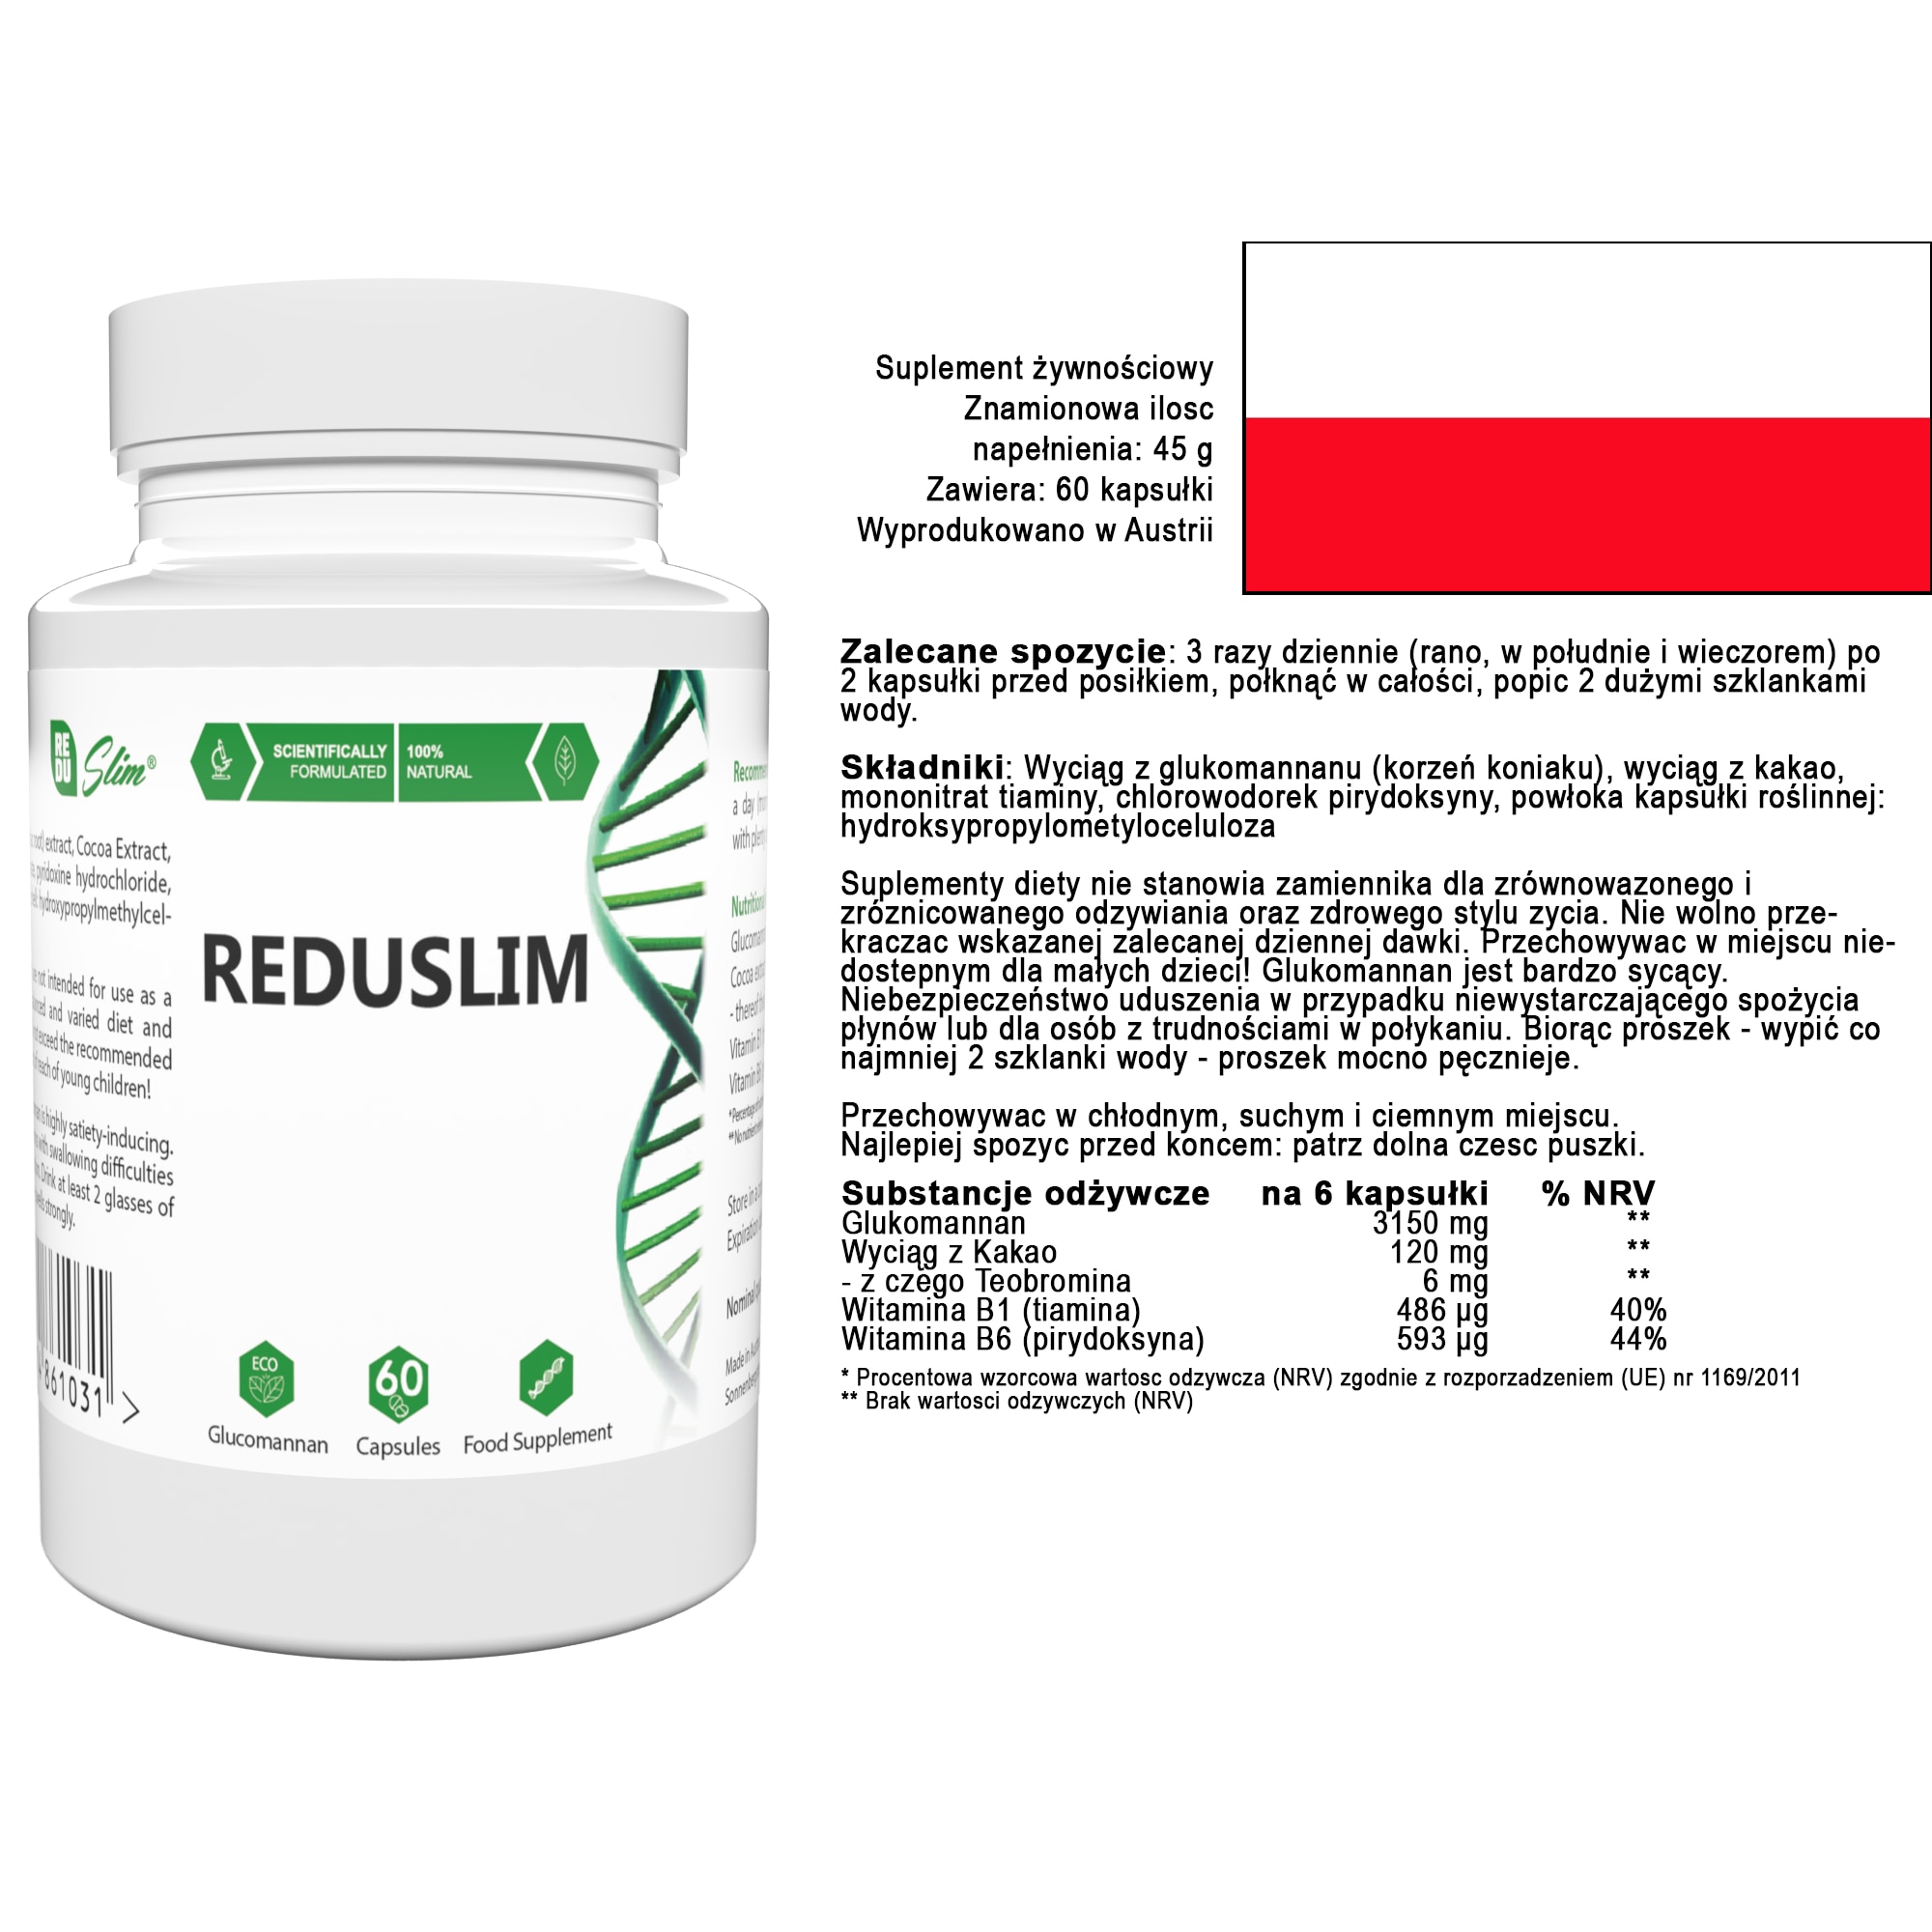 REDUSLIM - 100% Natural Ingredients (10 Capsules)